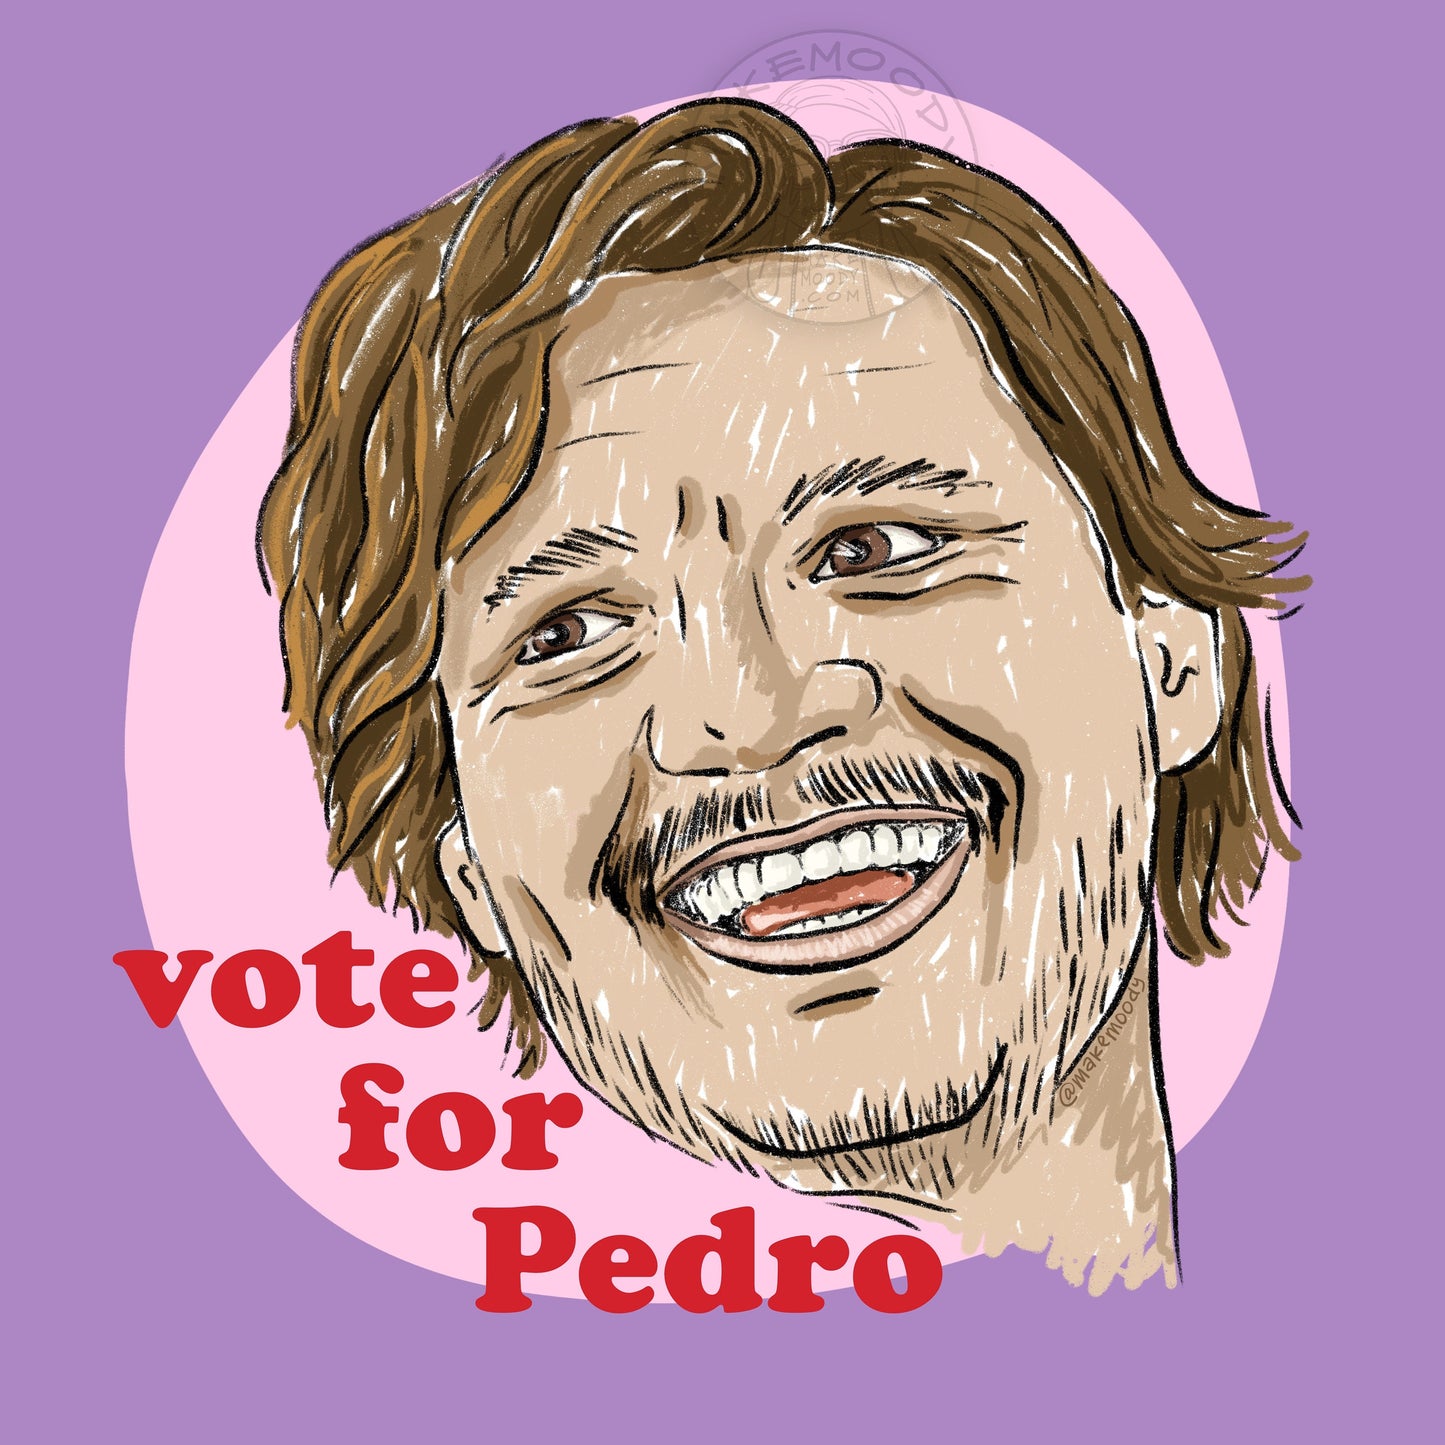 Pedro Pascal Vote for Pedro STICKER - Vinyl Decal Sticker - Pedrossance Sticker, Mando Sticker, Last of Us Sticker, Joel and Ellie Sticker